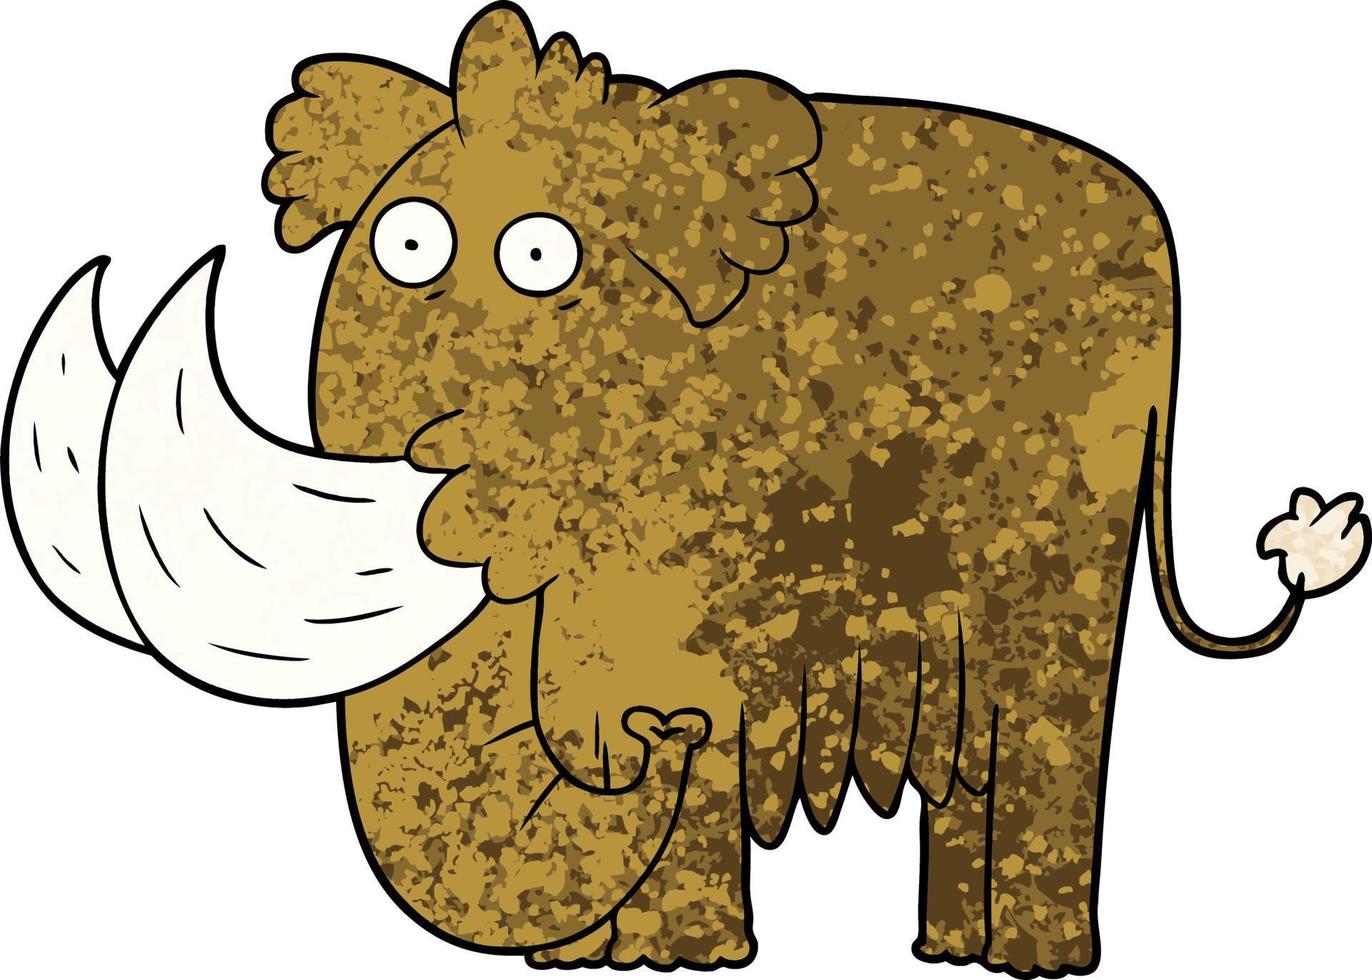 Retro-Grunge-Textur Cartoon-Mammut vektor